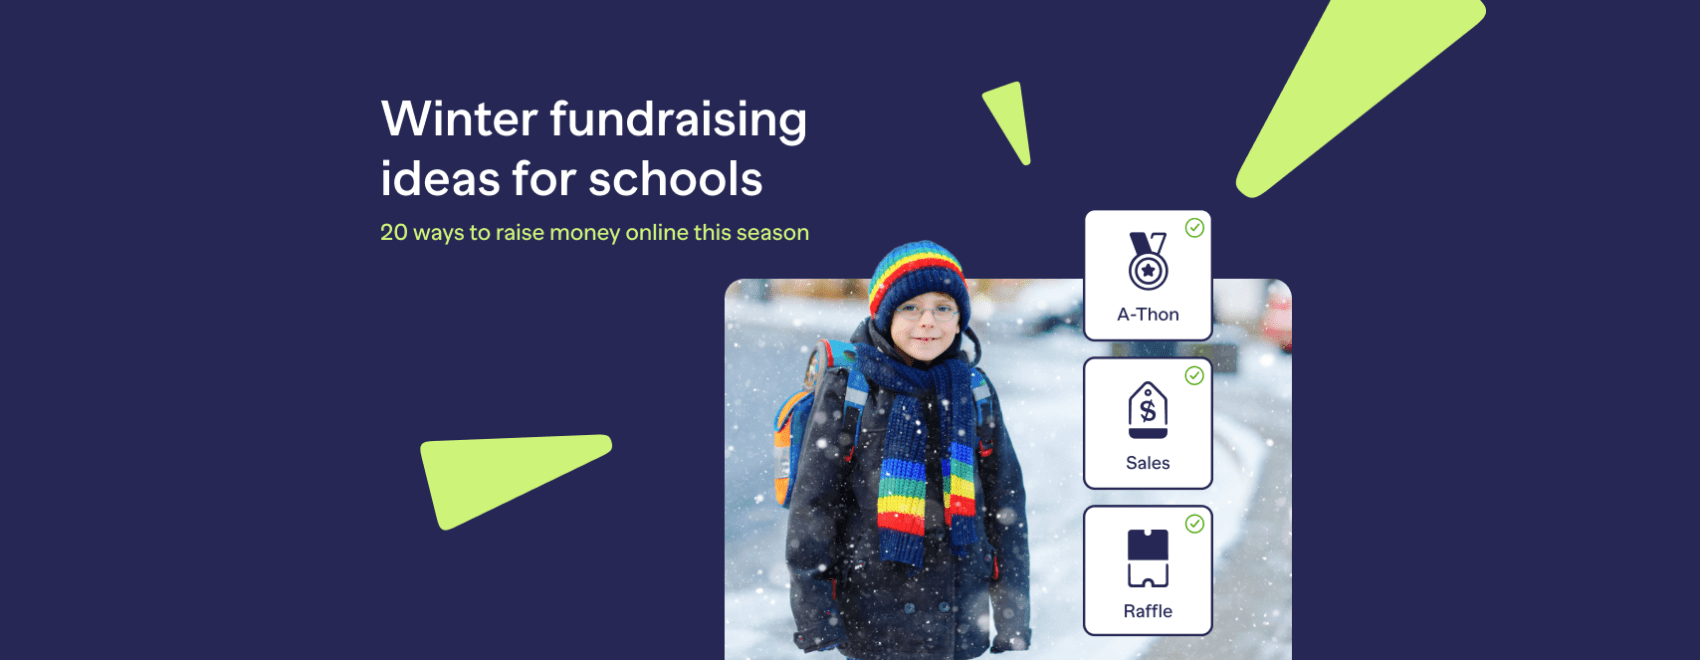 Winter fundraising ideas for schools 20 ways to raise money online this season